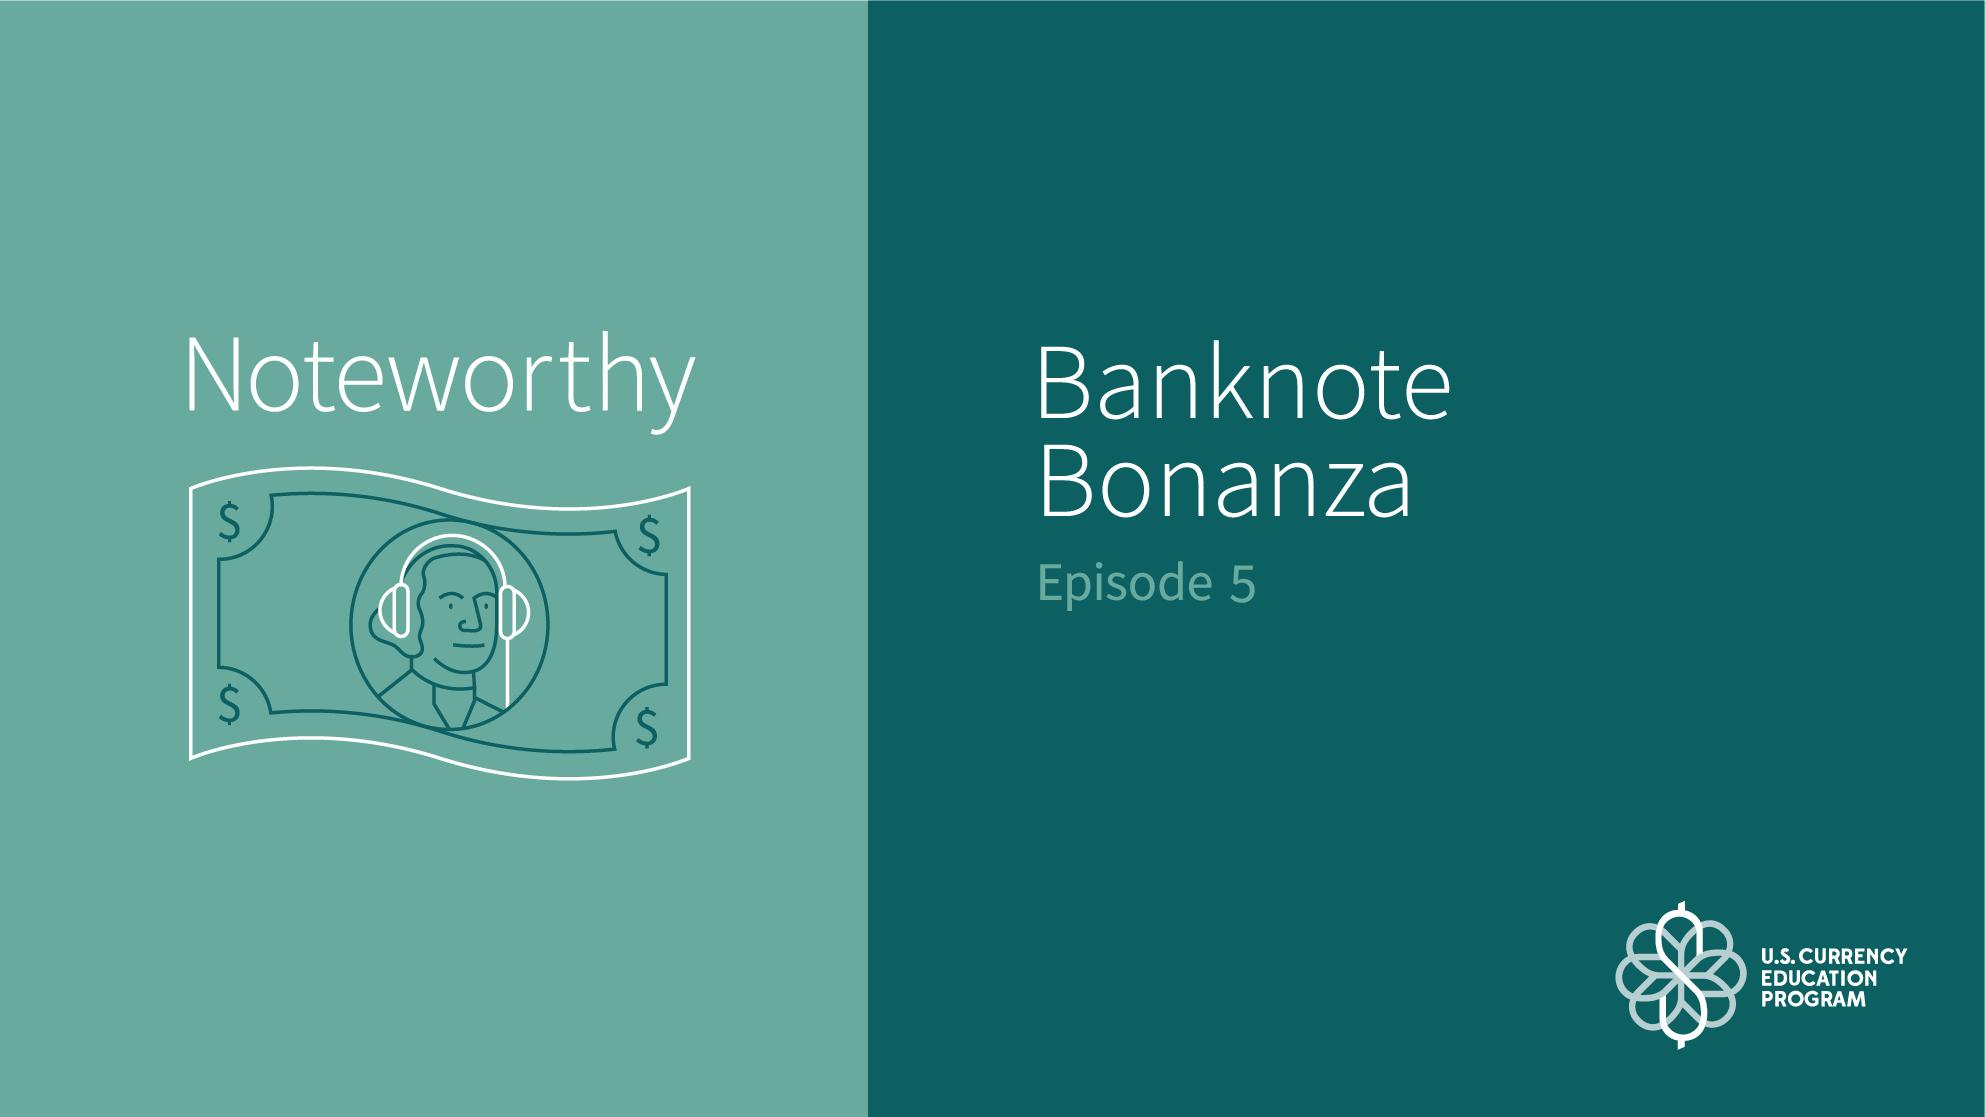 Noteworthy Podcast Episode 5: Banknote Bonanza